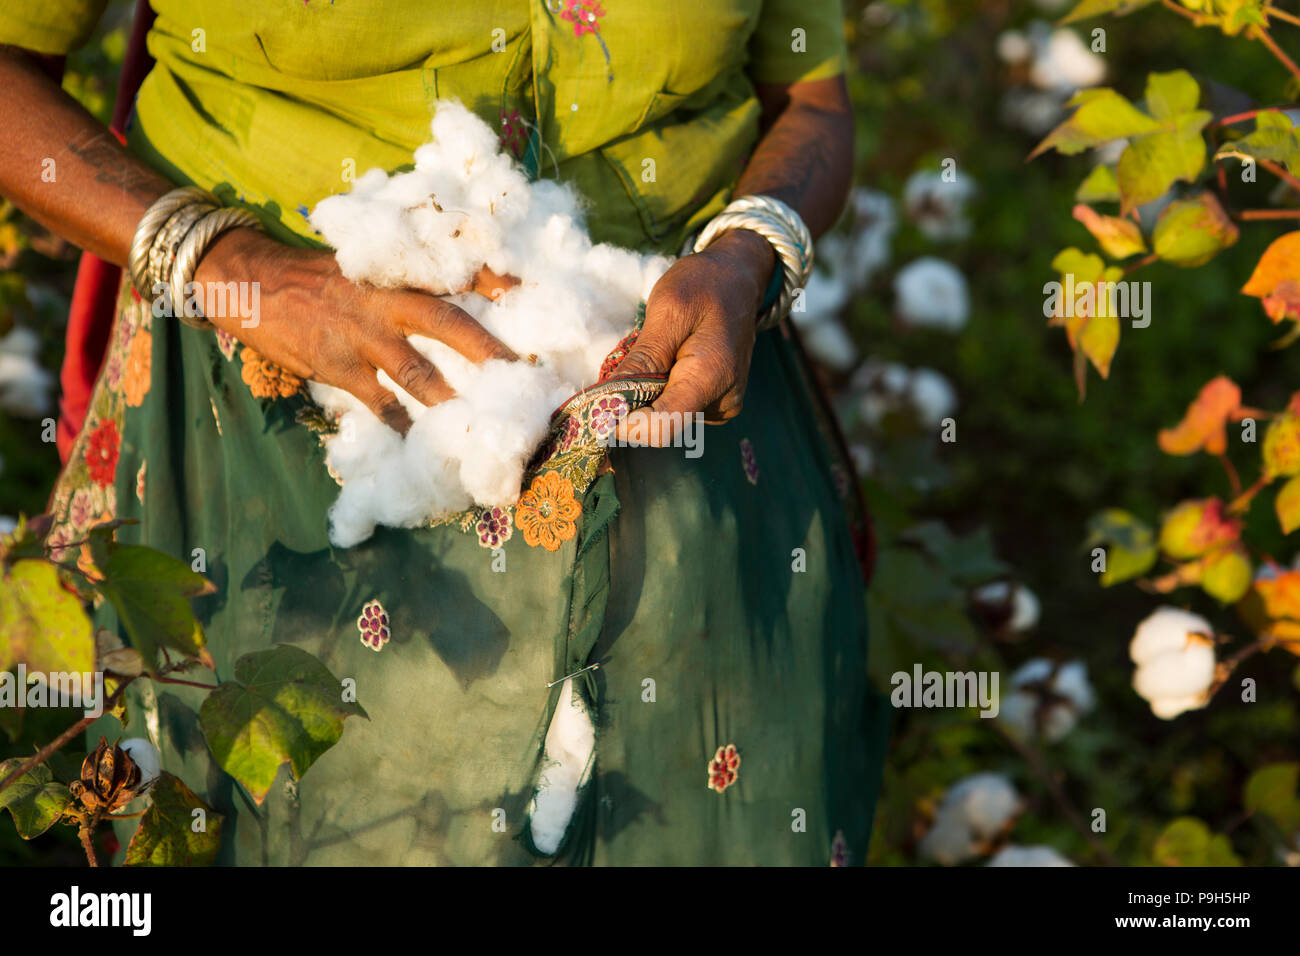 Female farmers hands harvesting organic cotton on their family farm in Sendhwa, India. Stock Photo